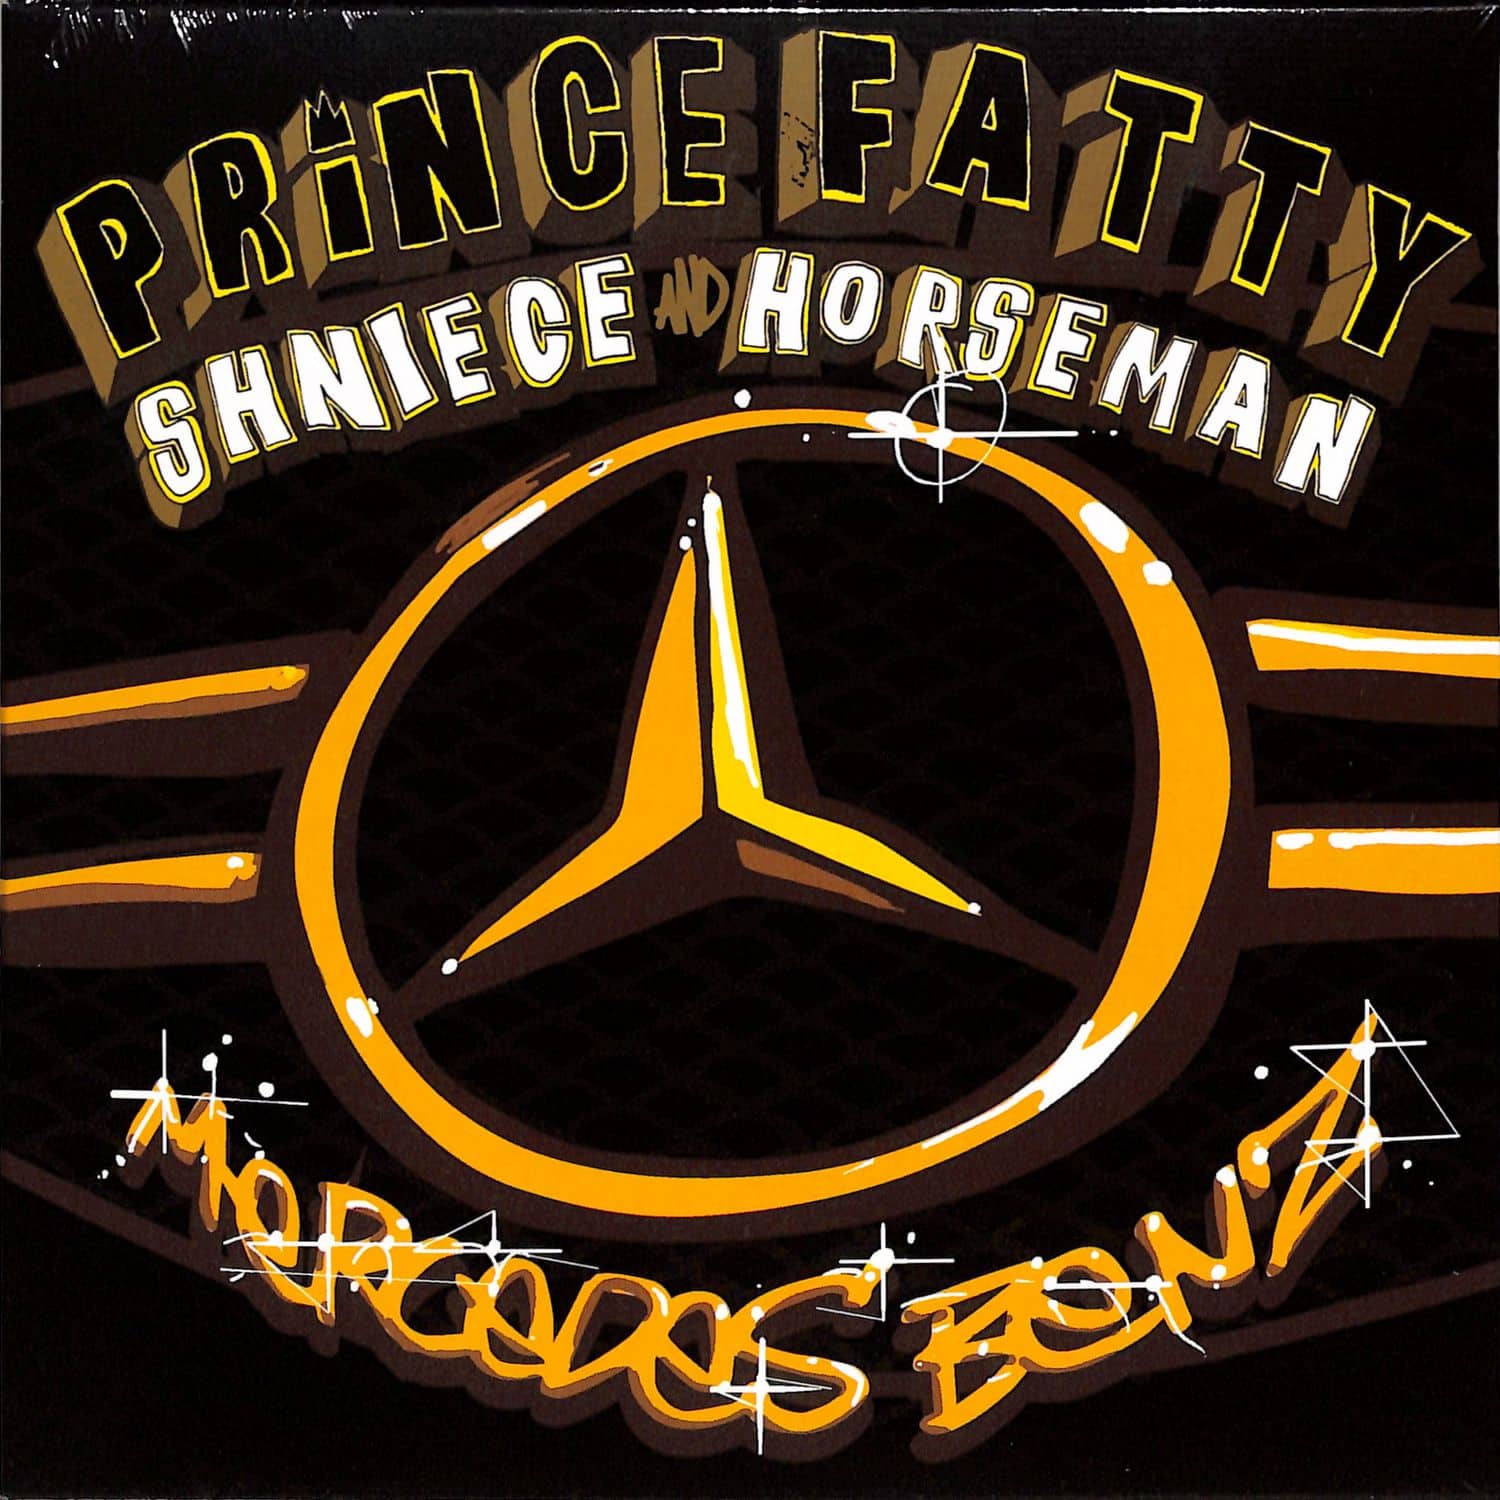 Prince Fatty feat Shniece / Horseman - MERCEDES BENZ 